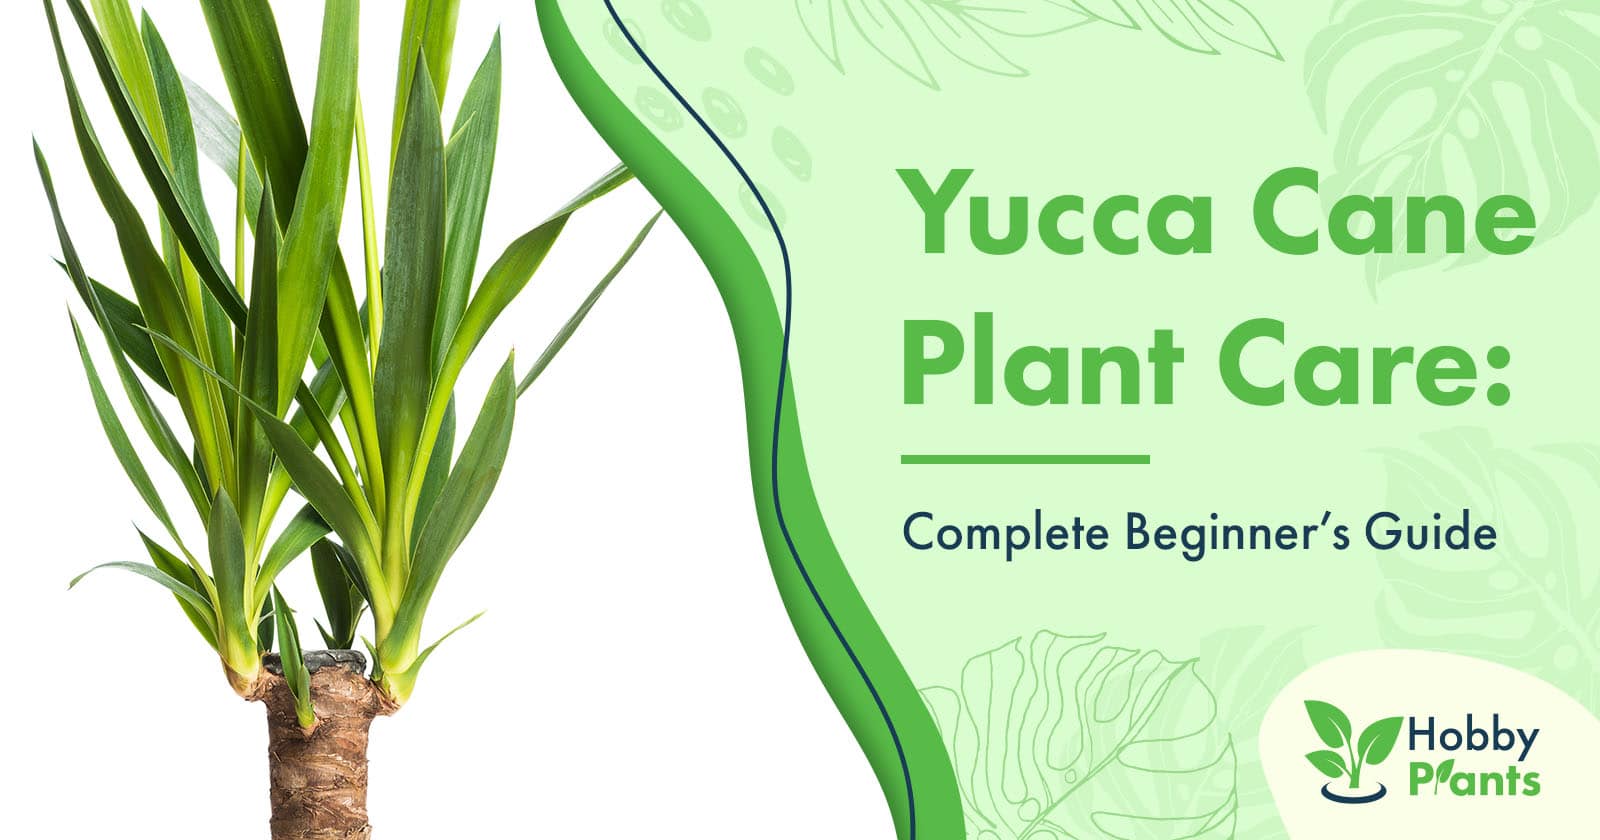 yucca cane plant care